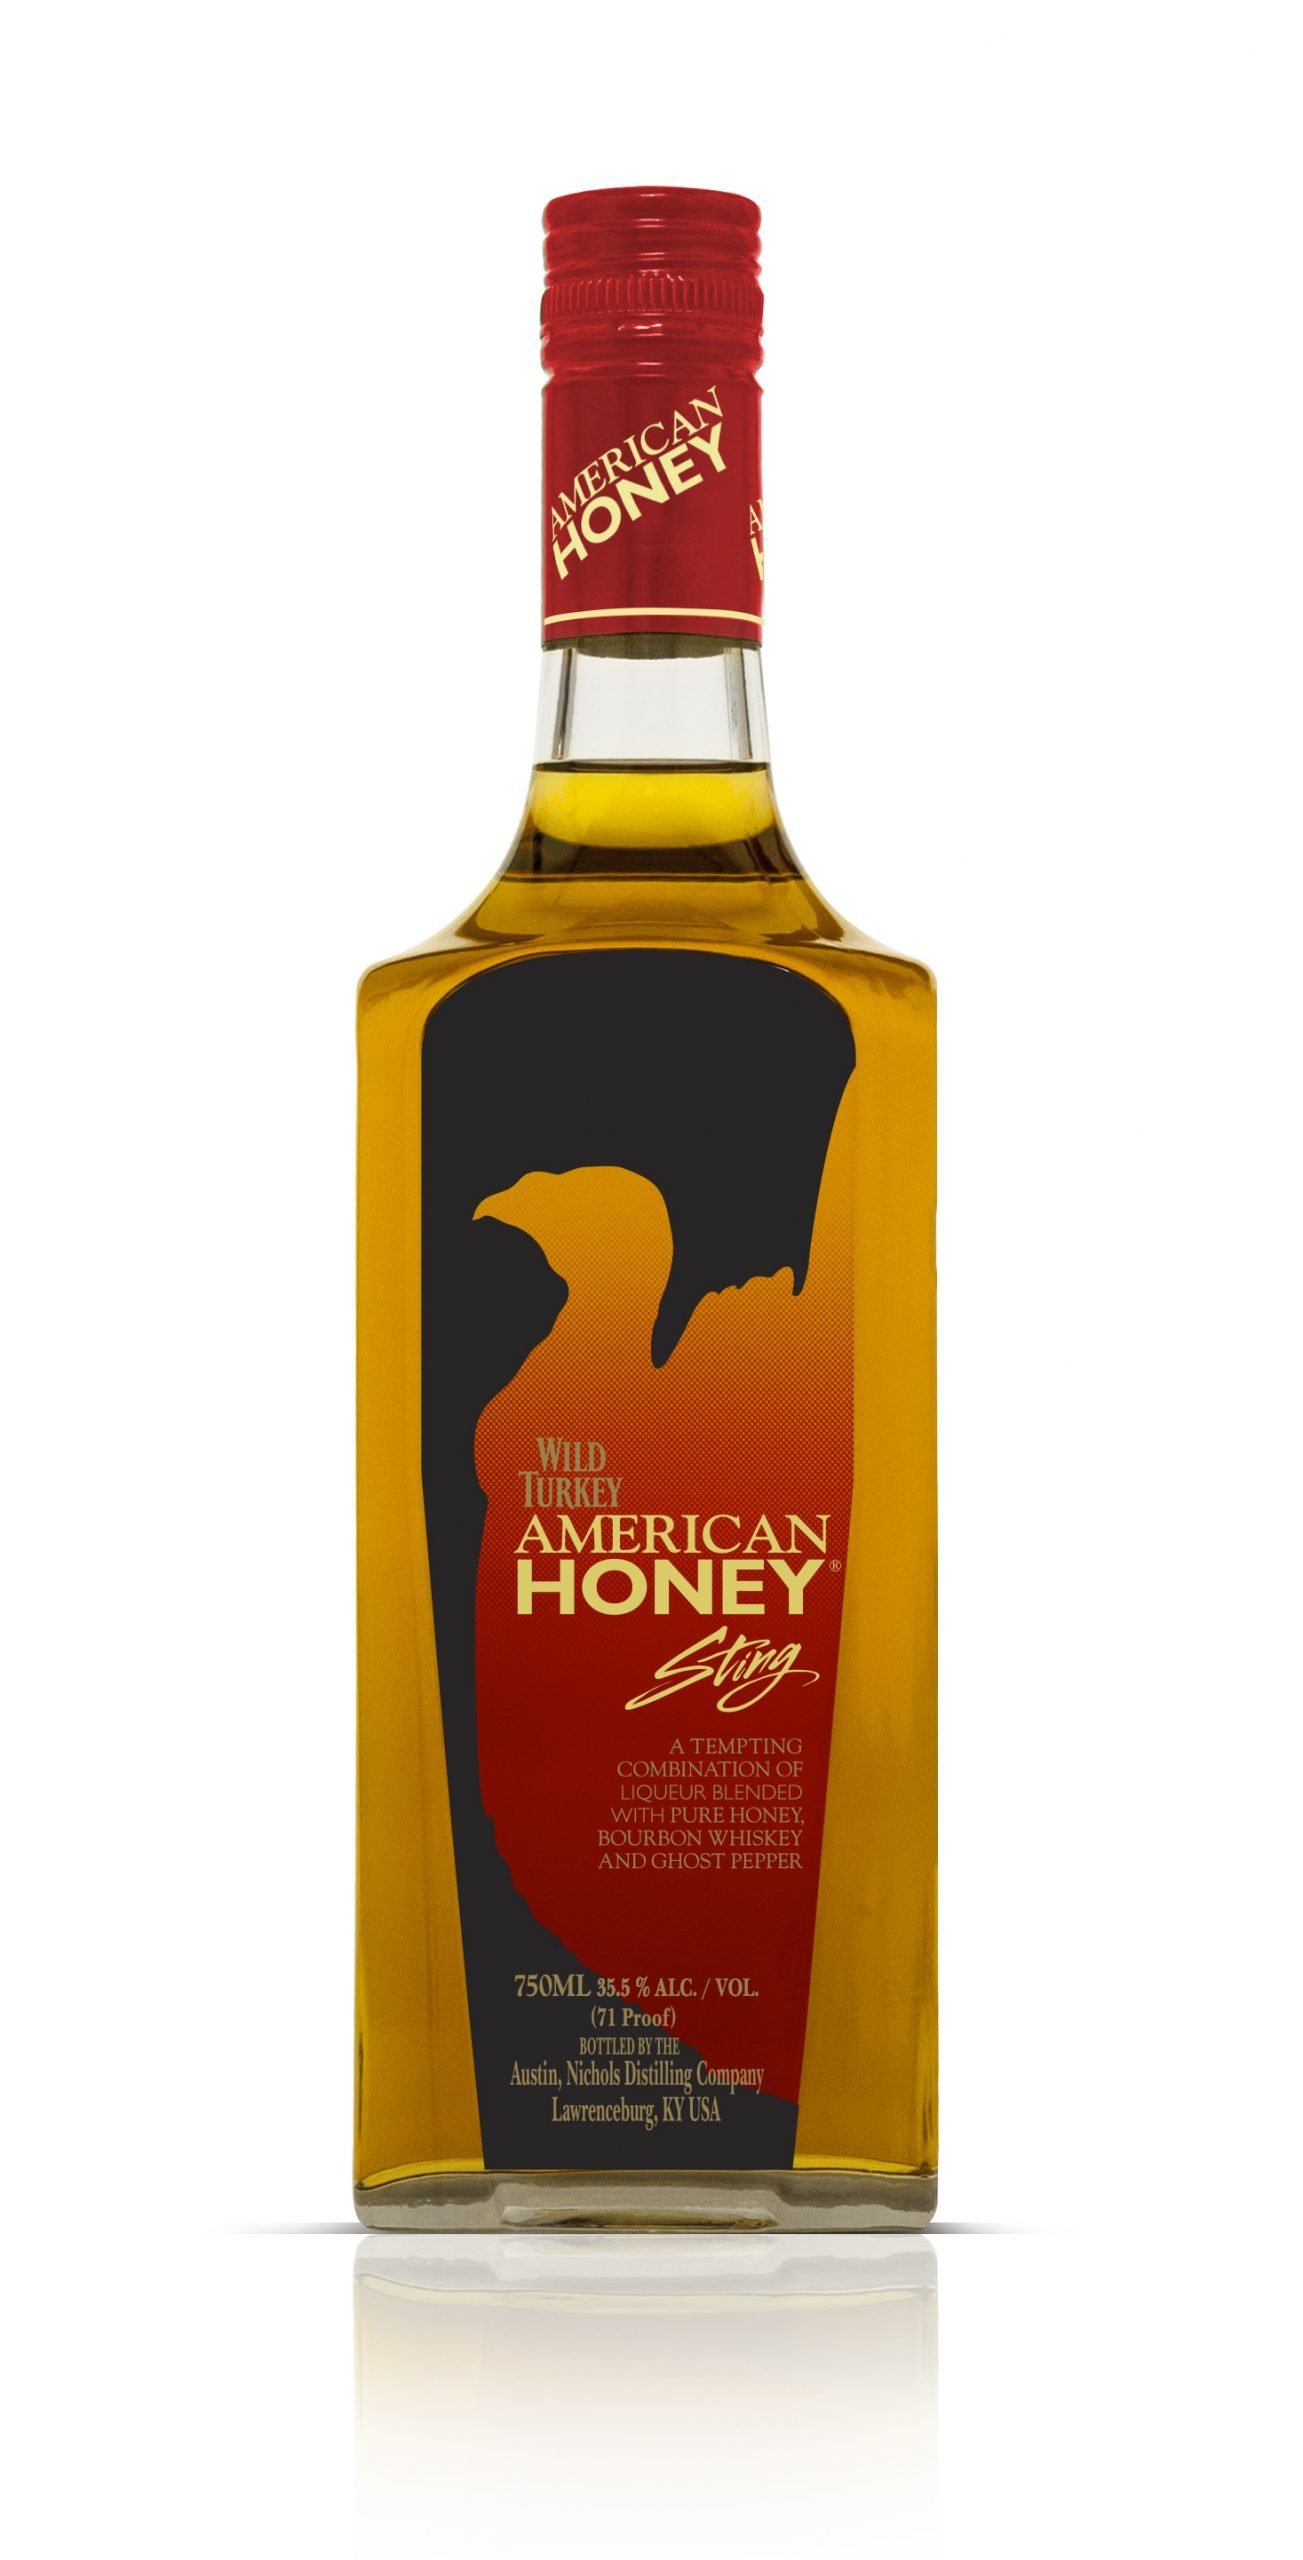 Review: Wild Turkey American Honey Sting